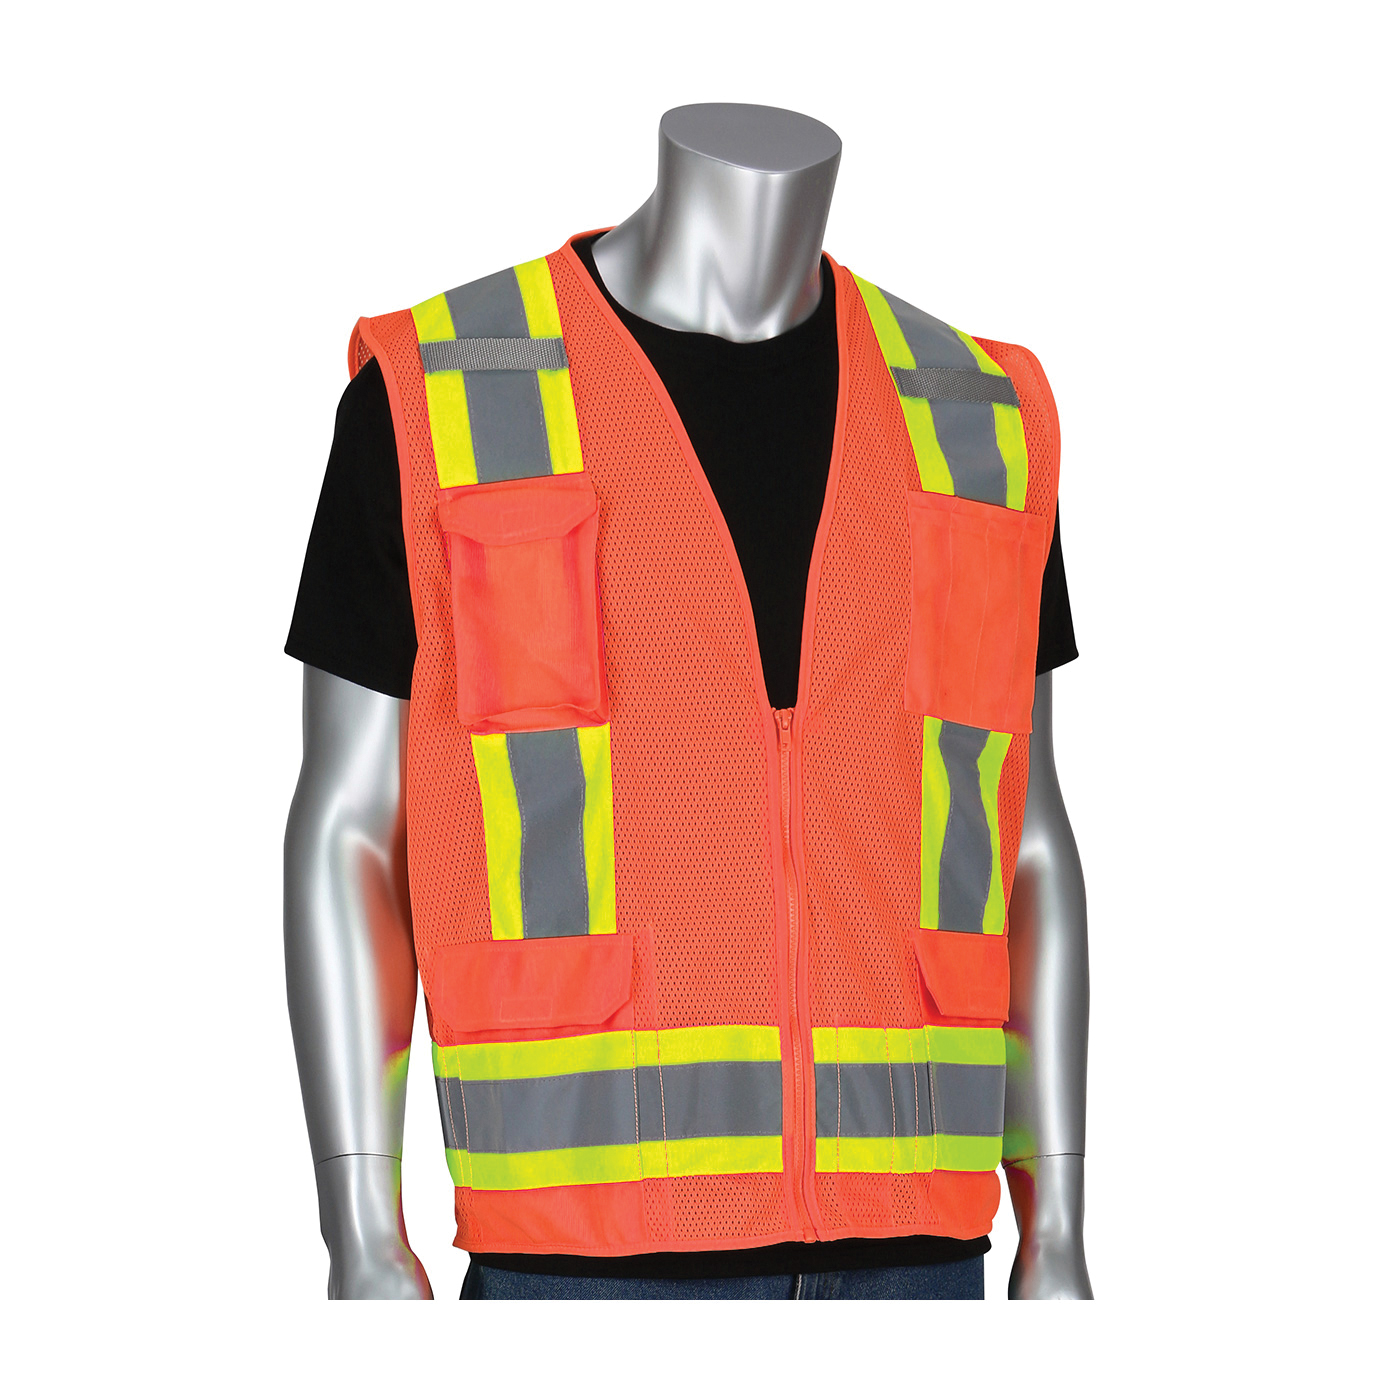 PIP® 302-0500M-OR/S 2-Tone Surveyor Safety Vest, S, Hi-Viz Orange, Polyester, Zipper Closure, 11 Pockets, ANSI Class: Class 2, Specifications Met: ANSI 107 Type R